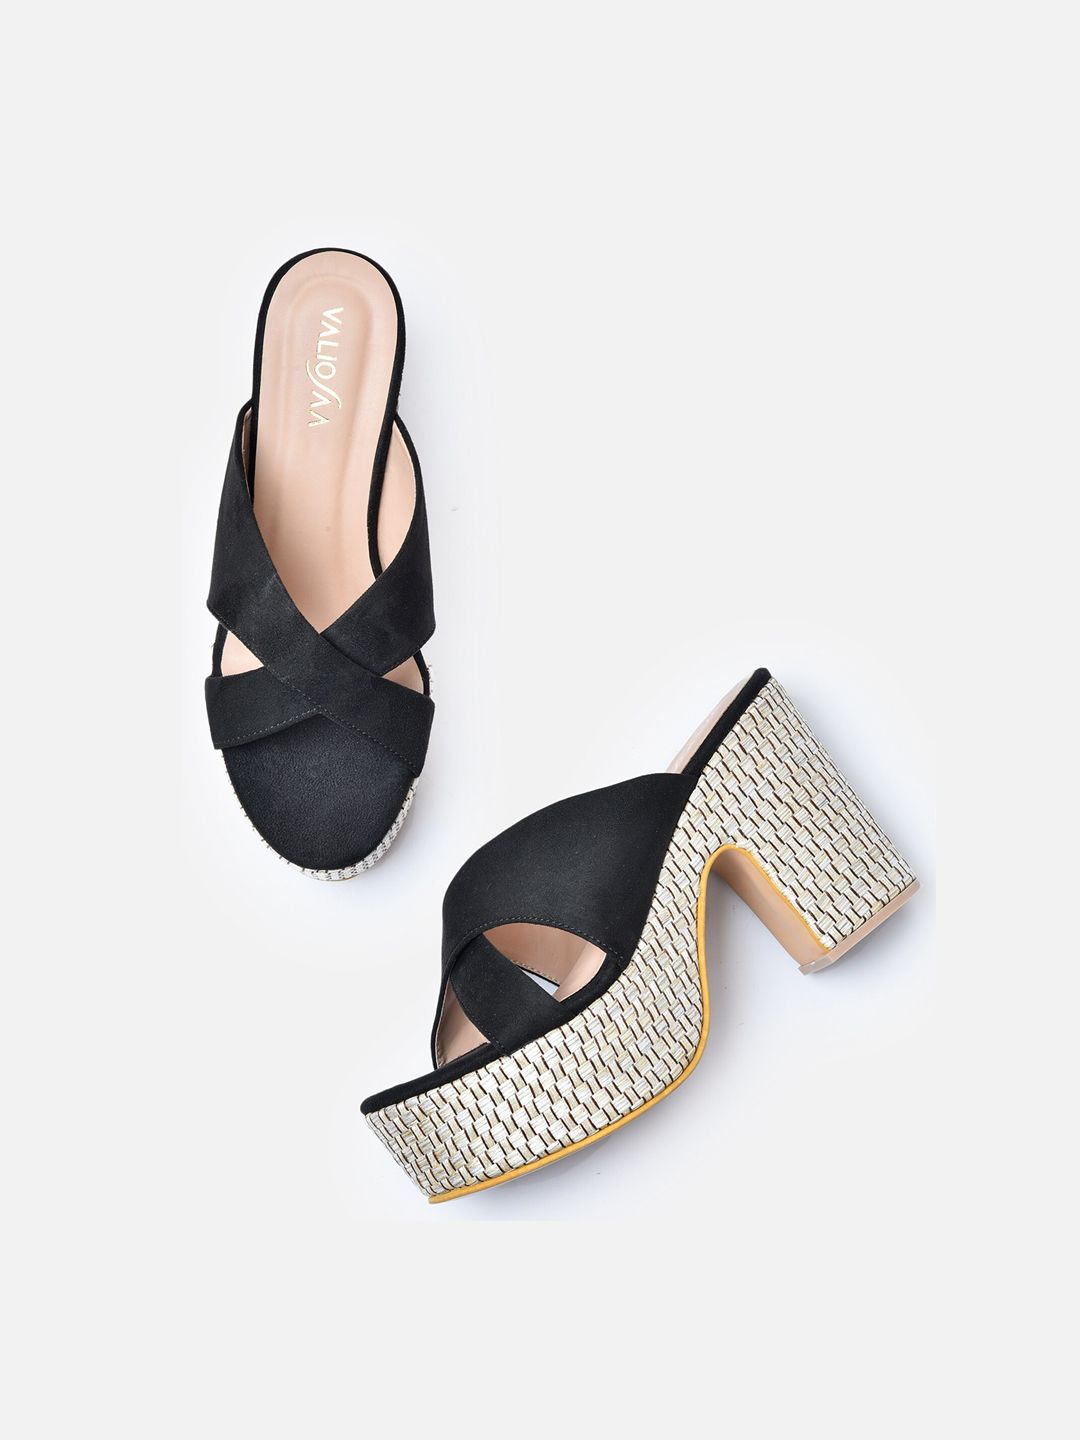 VALIOSAA Black Suede Platform Sandals with Buckles Price in India